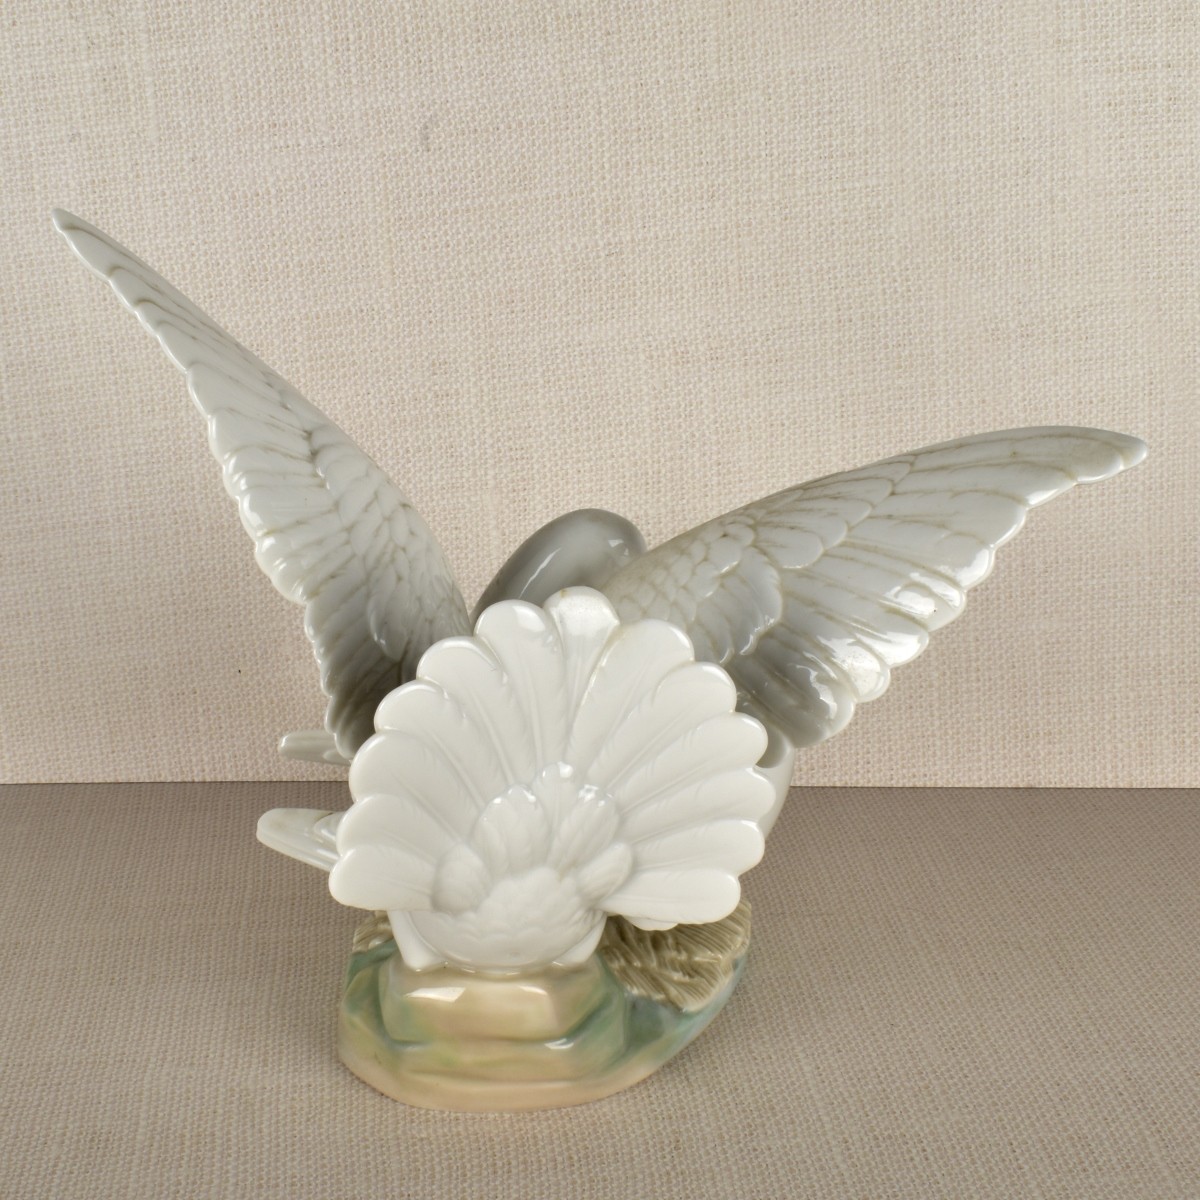 Lladro Figurine of Doves